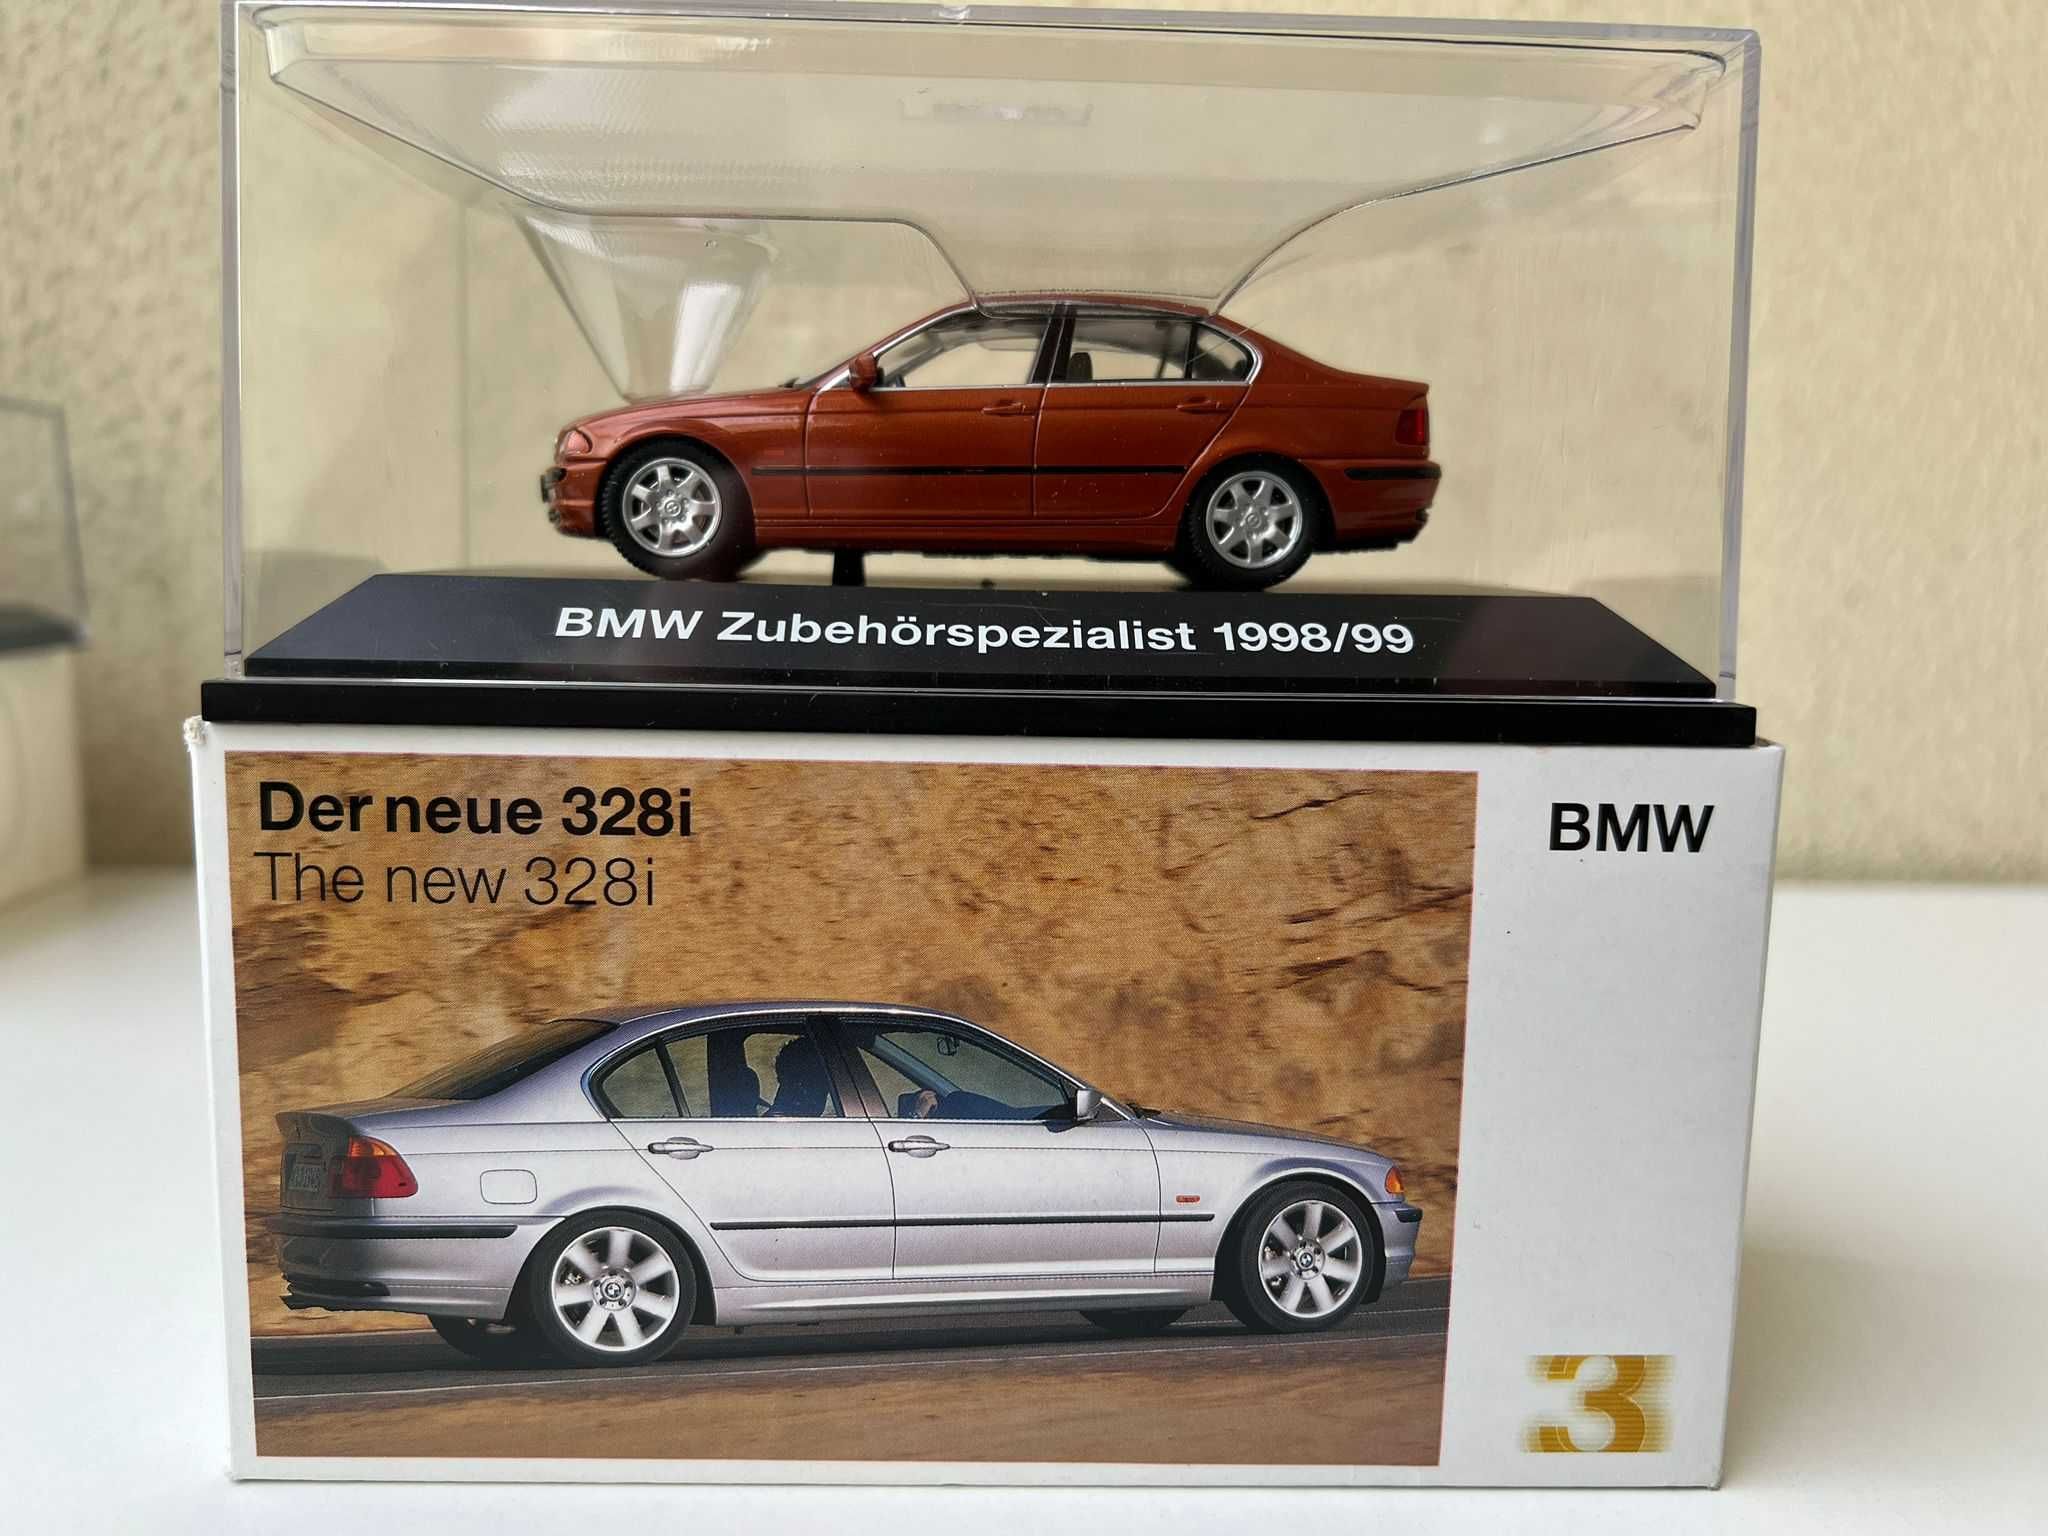 Macheta Auto 1/43 BMW 328i 1998 Editie Limitata Dealer Edition 50 buc